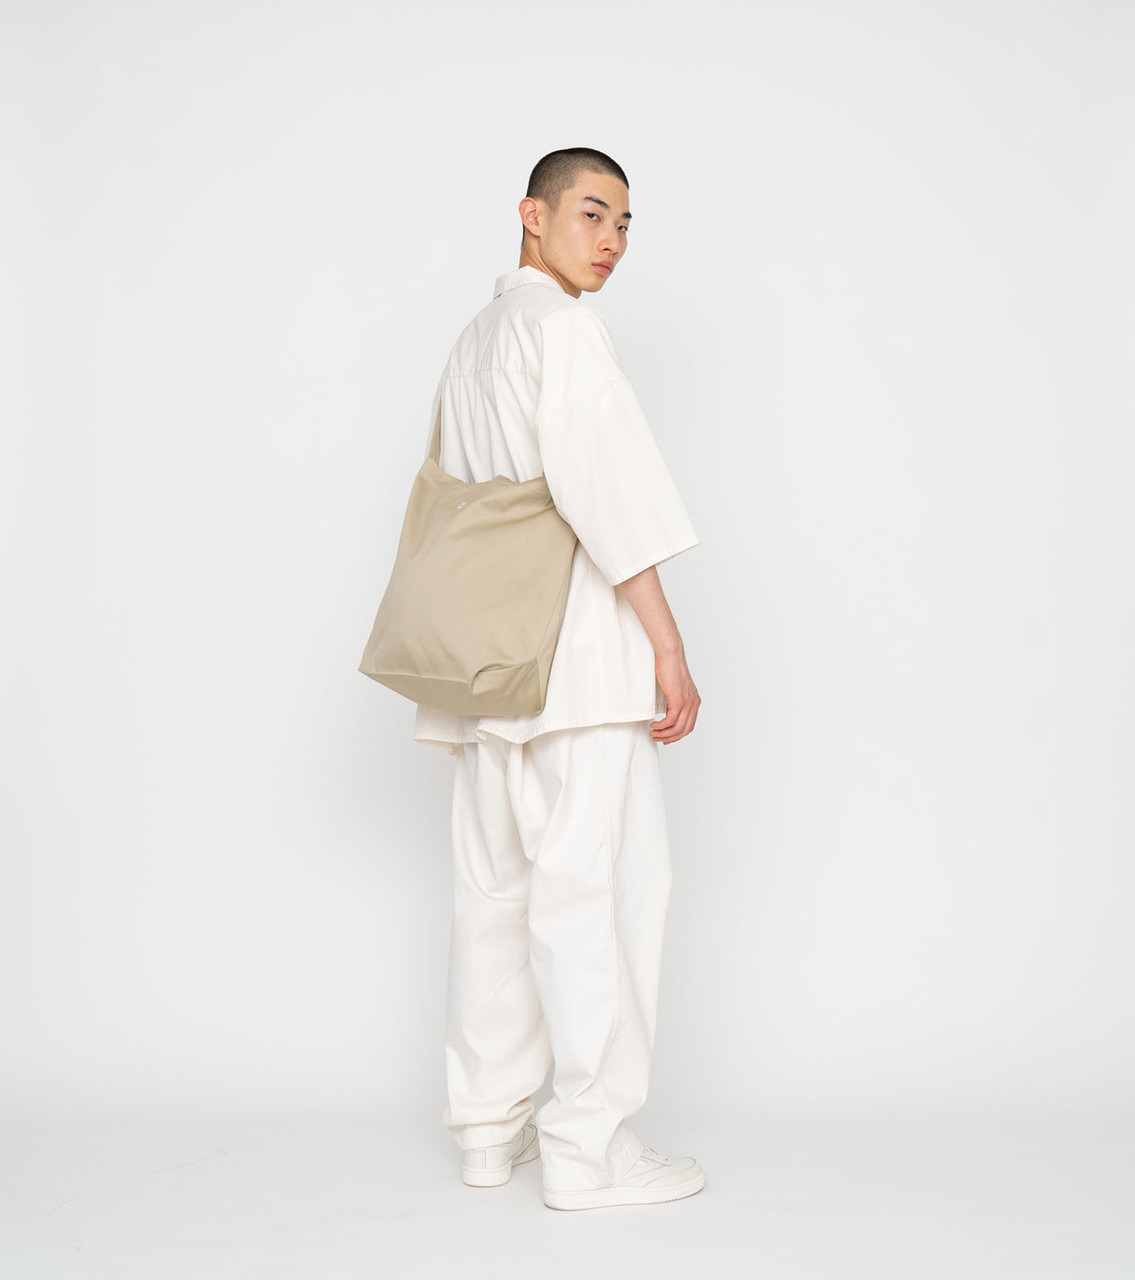 nanamica BAG Chino Tote Bag Online Shop to Worldwide